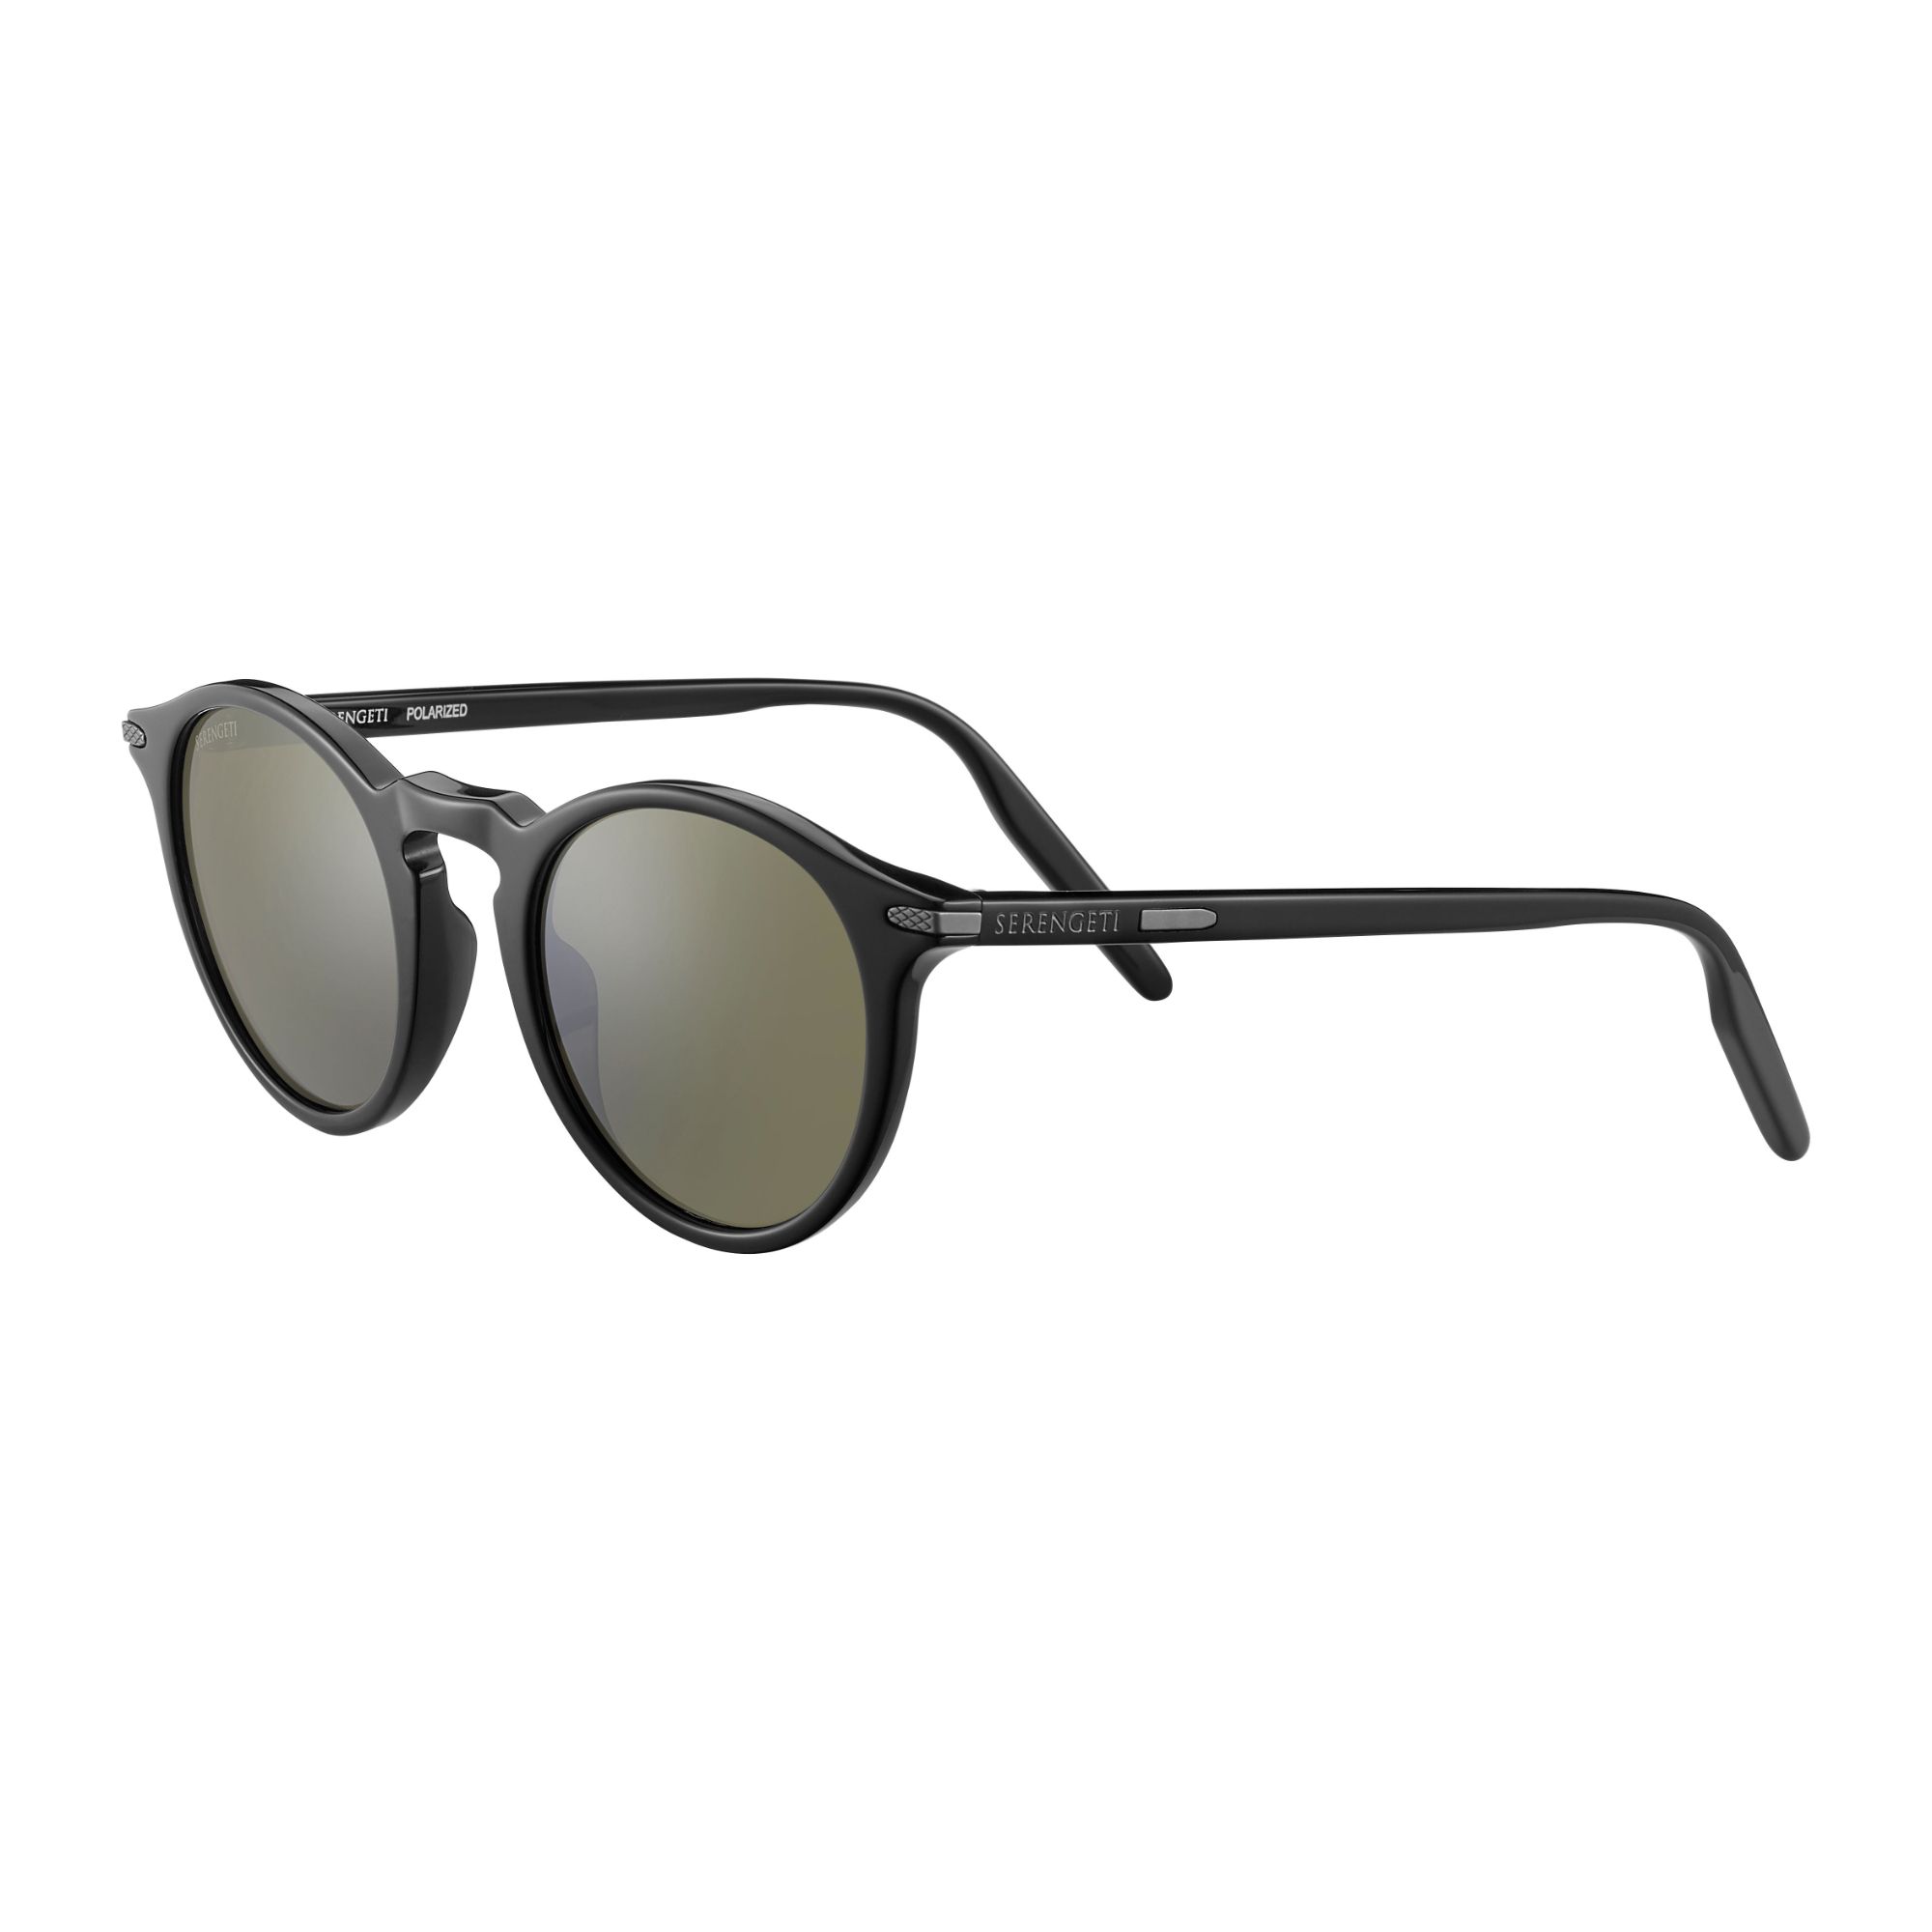 8950 Panthos Sunglasses 8950 - size 48